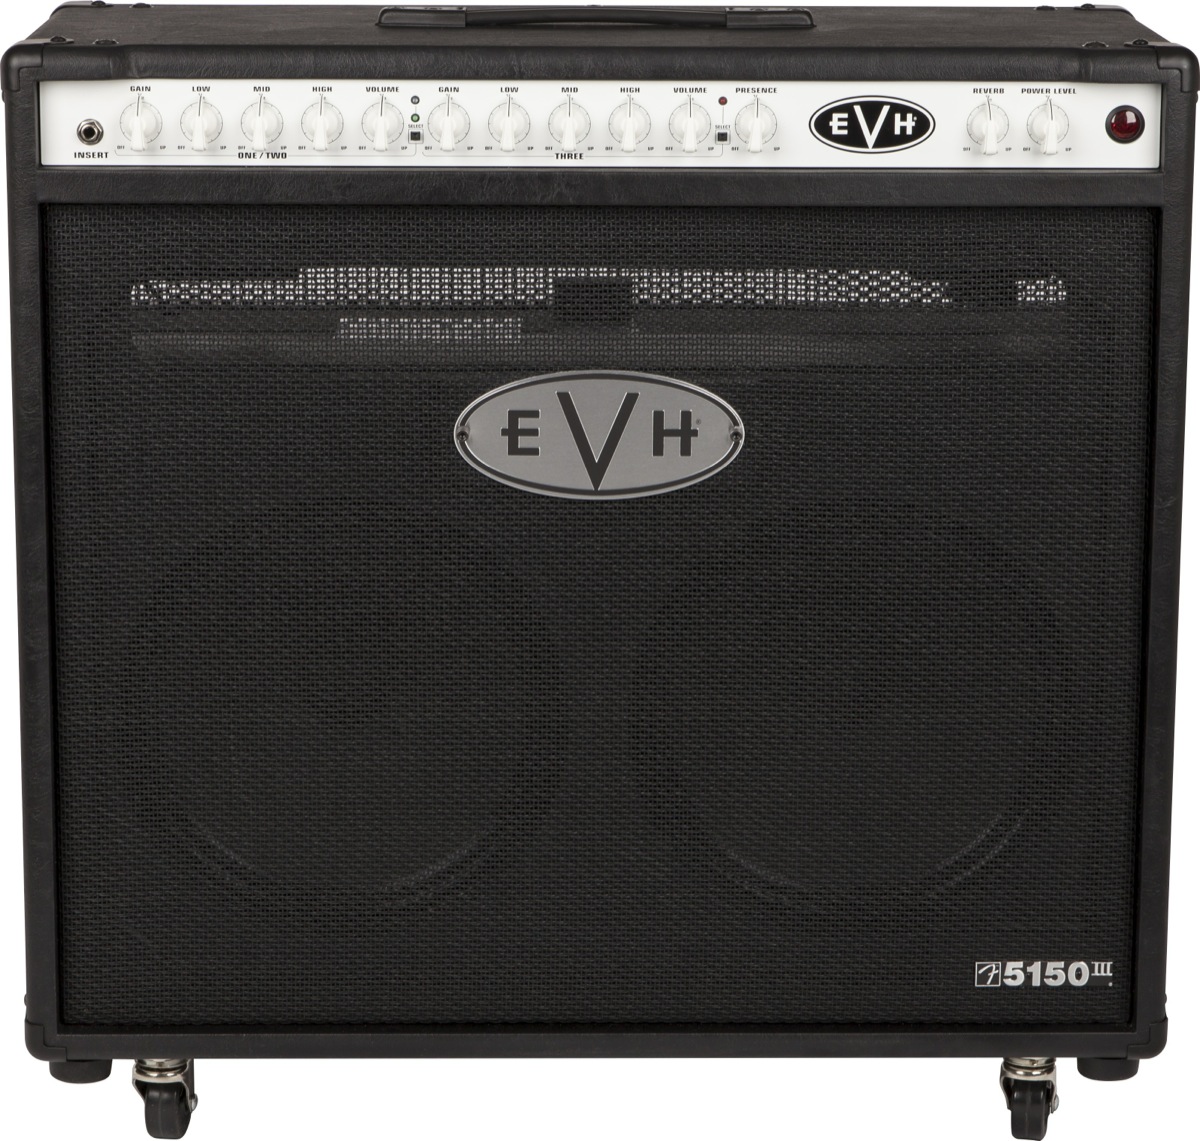 EVH EVH 5150 III 2x12 Guitar Combo Amplifier - Black